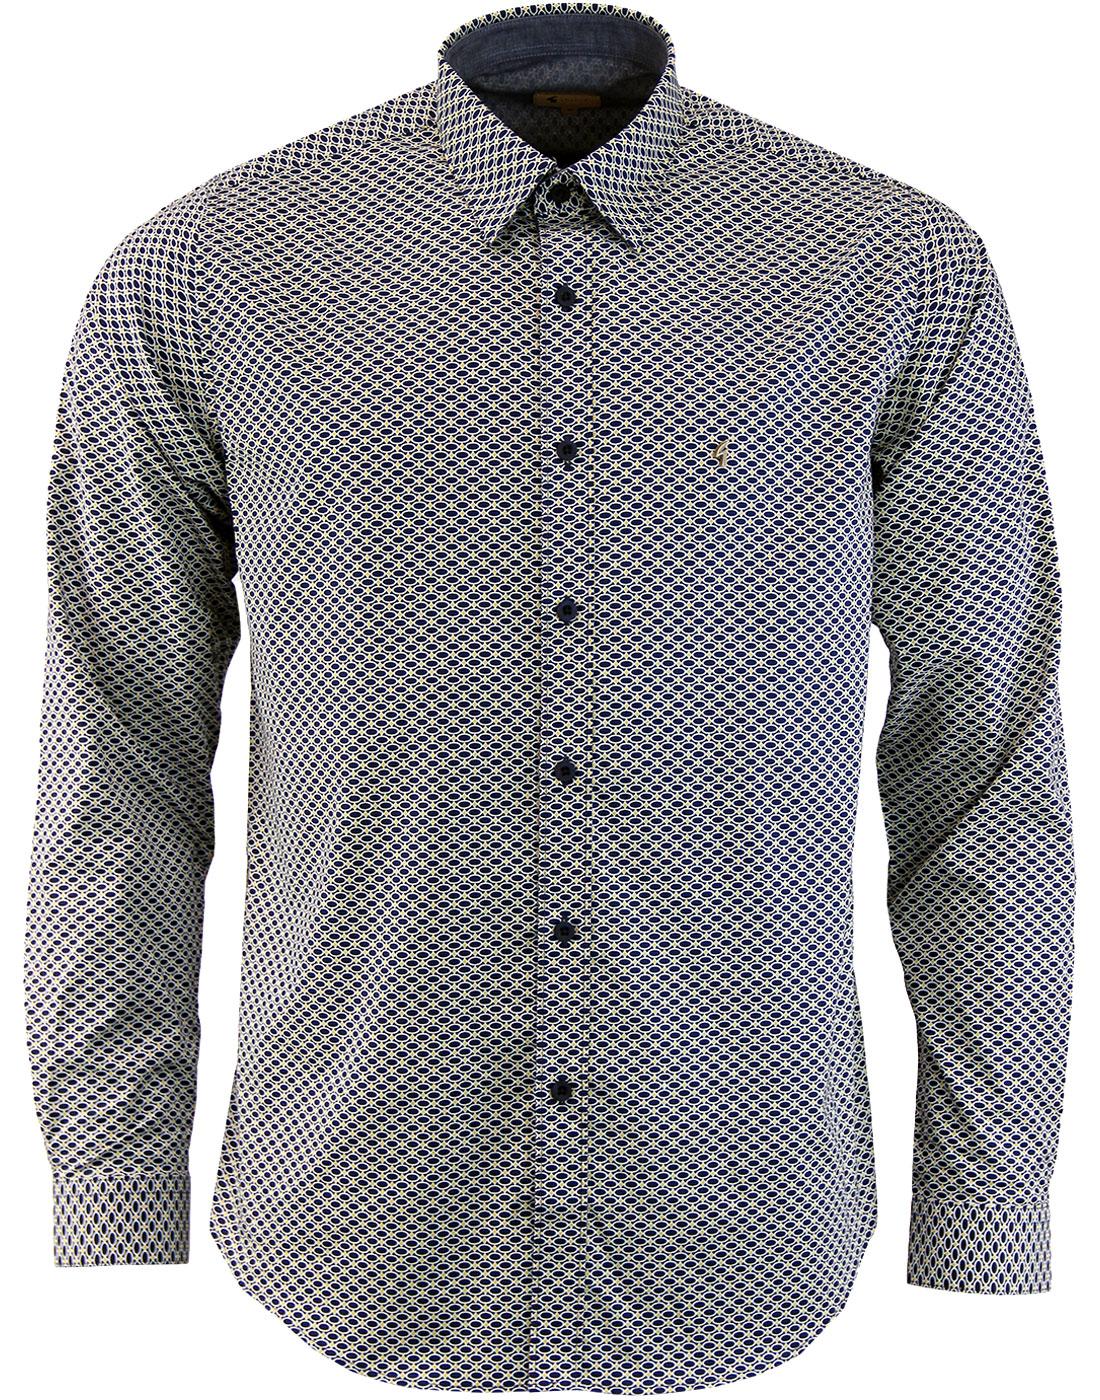 Goring GABICCI VINTAGE 60s Geometric Pattern Shirt